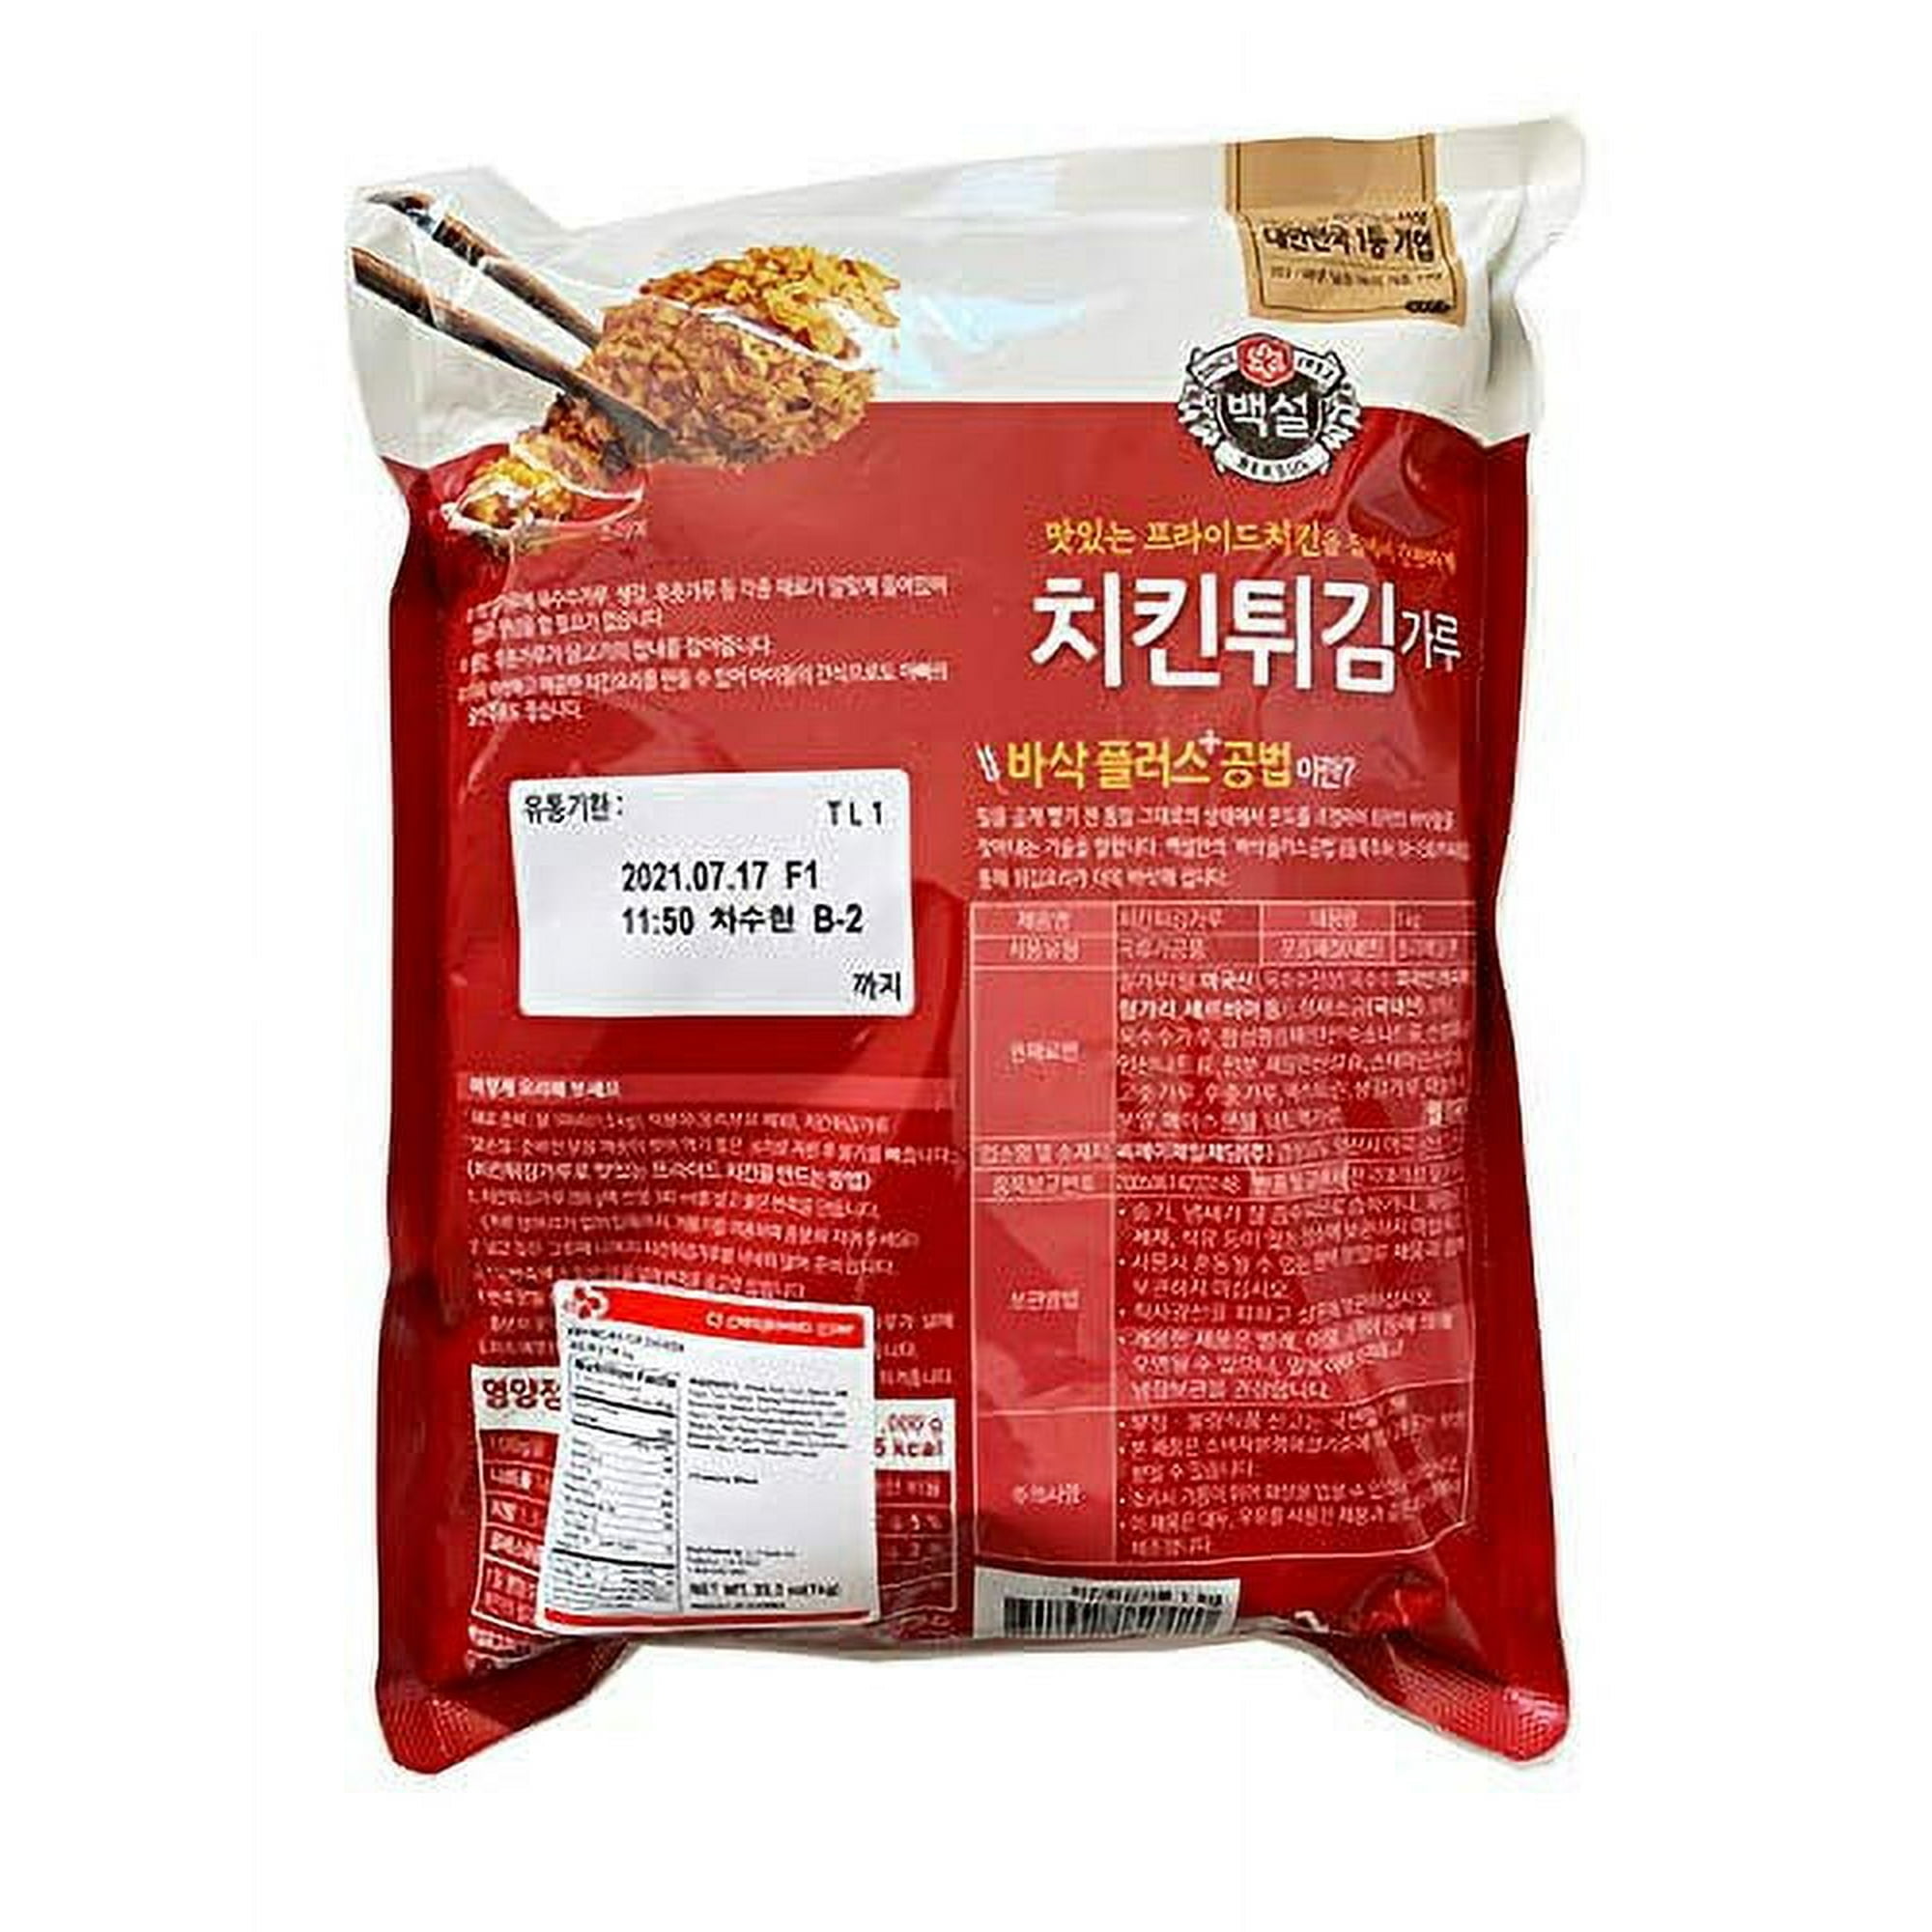 Woomtree Fried Chicken powder in bag